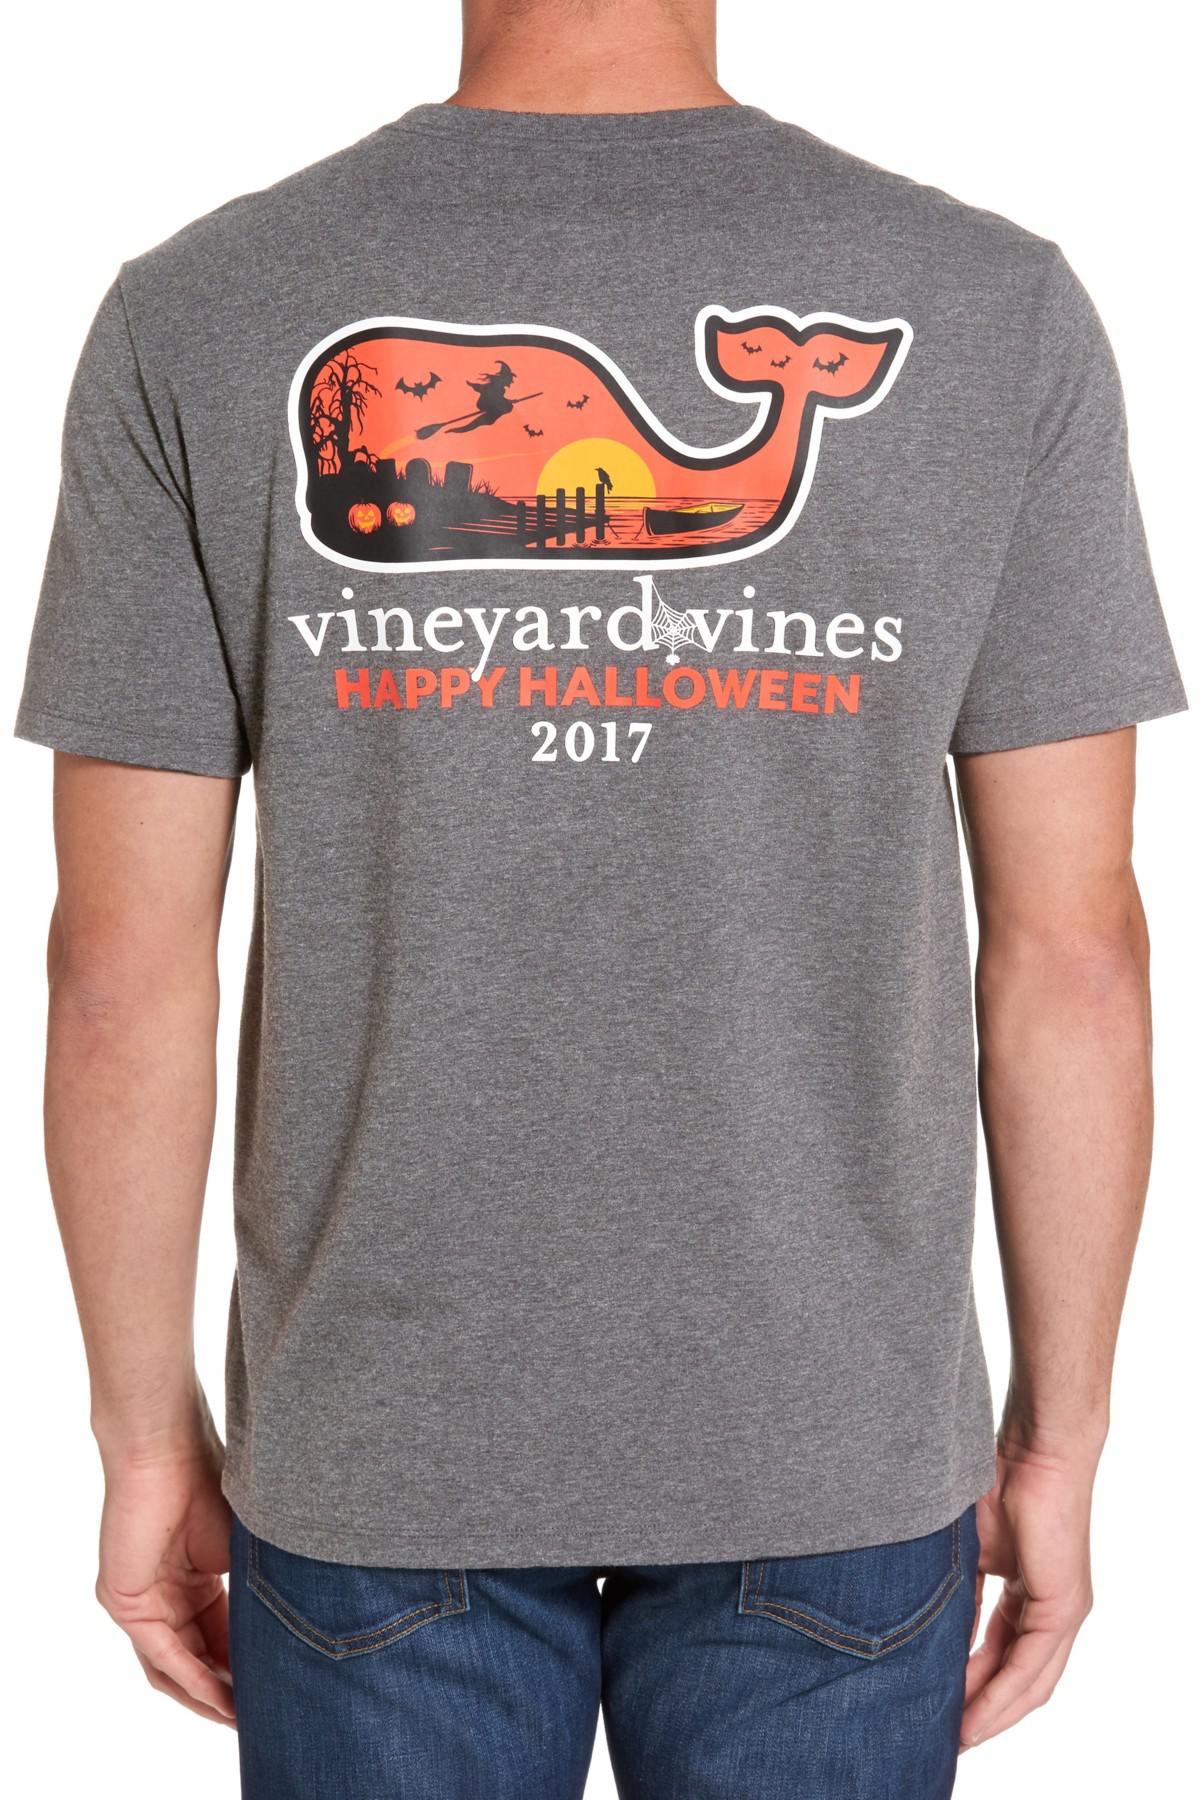 Vineyard Vines Halloween 2017 Graphic Pocket T-shirt in Gray for Men